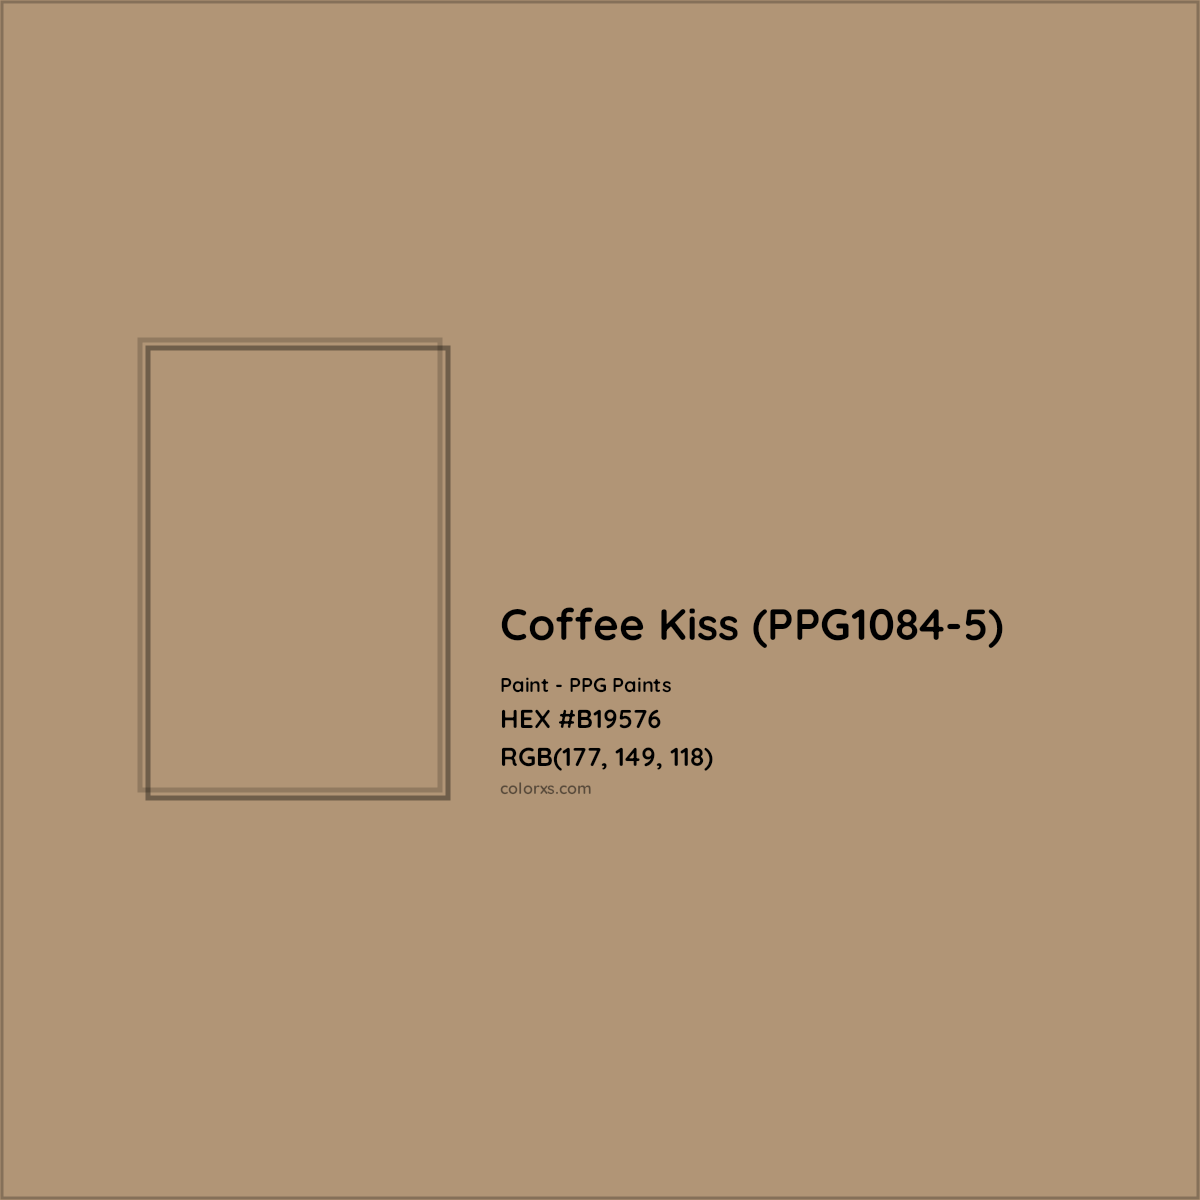 HEX #B19576 Coffee Kiss (PPG1084-5) Paint PPG Paints - Color Code